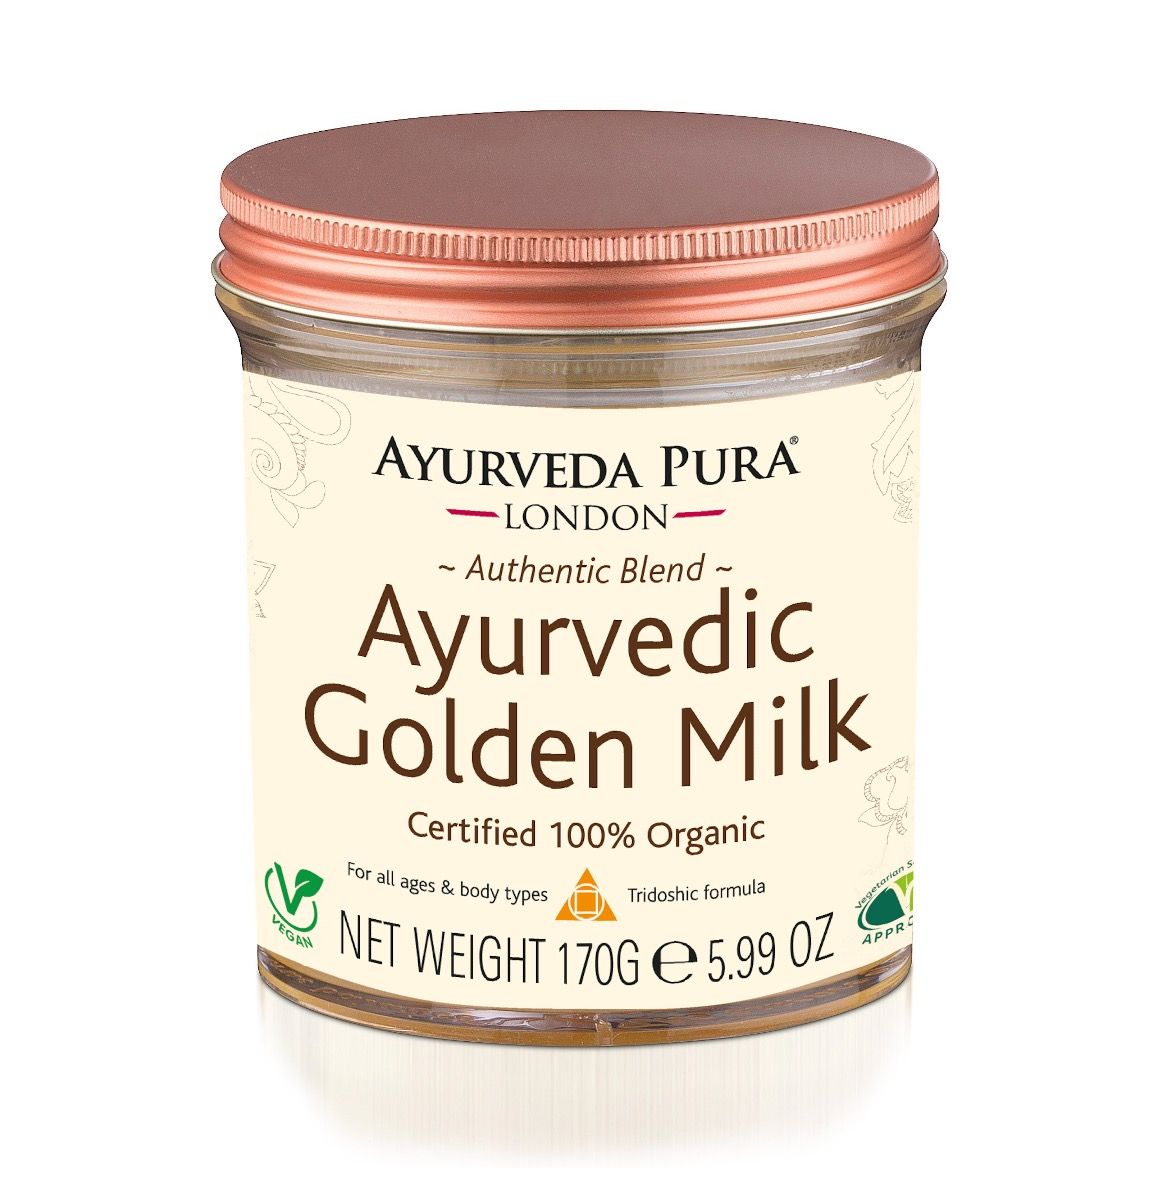 Ayurvedic Golden Milk - Leche Dorada Ayurvédica 100% Certificada Orgánica